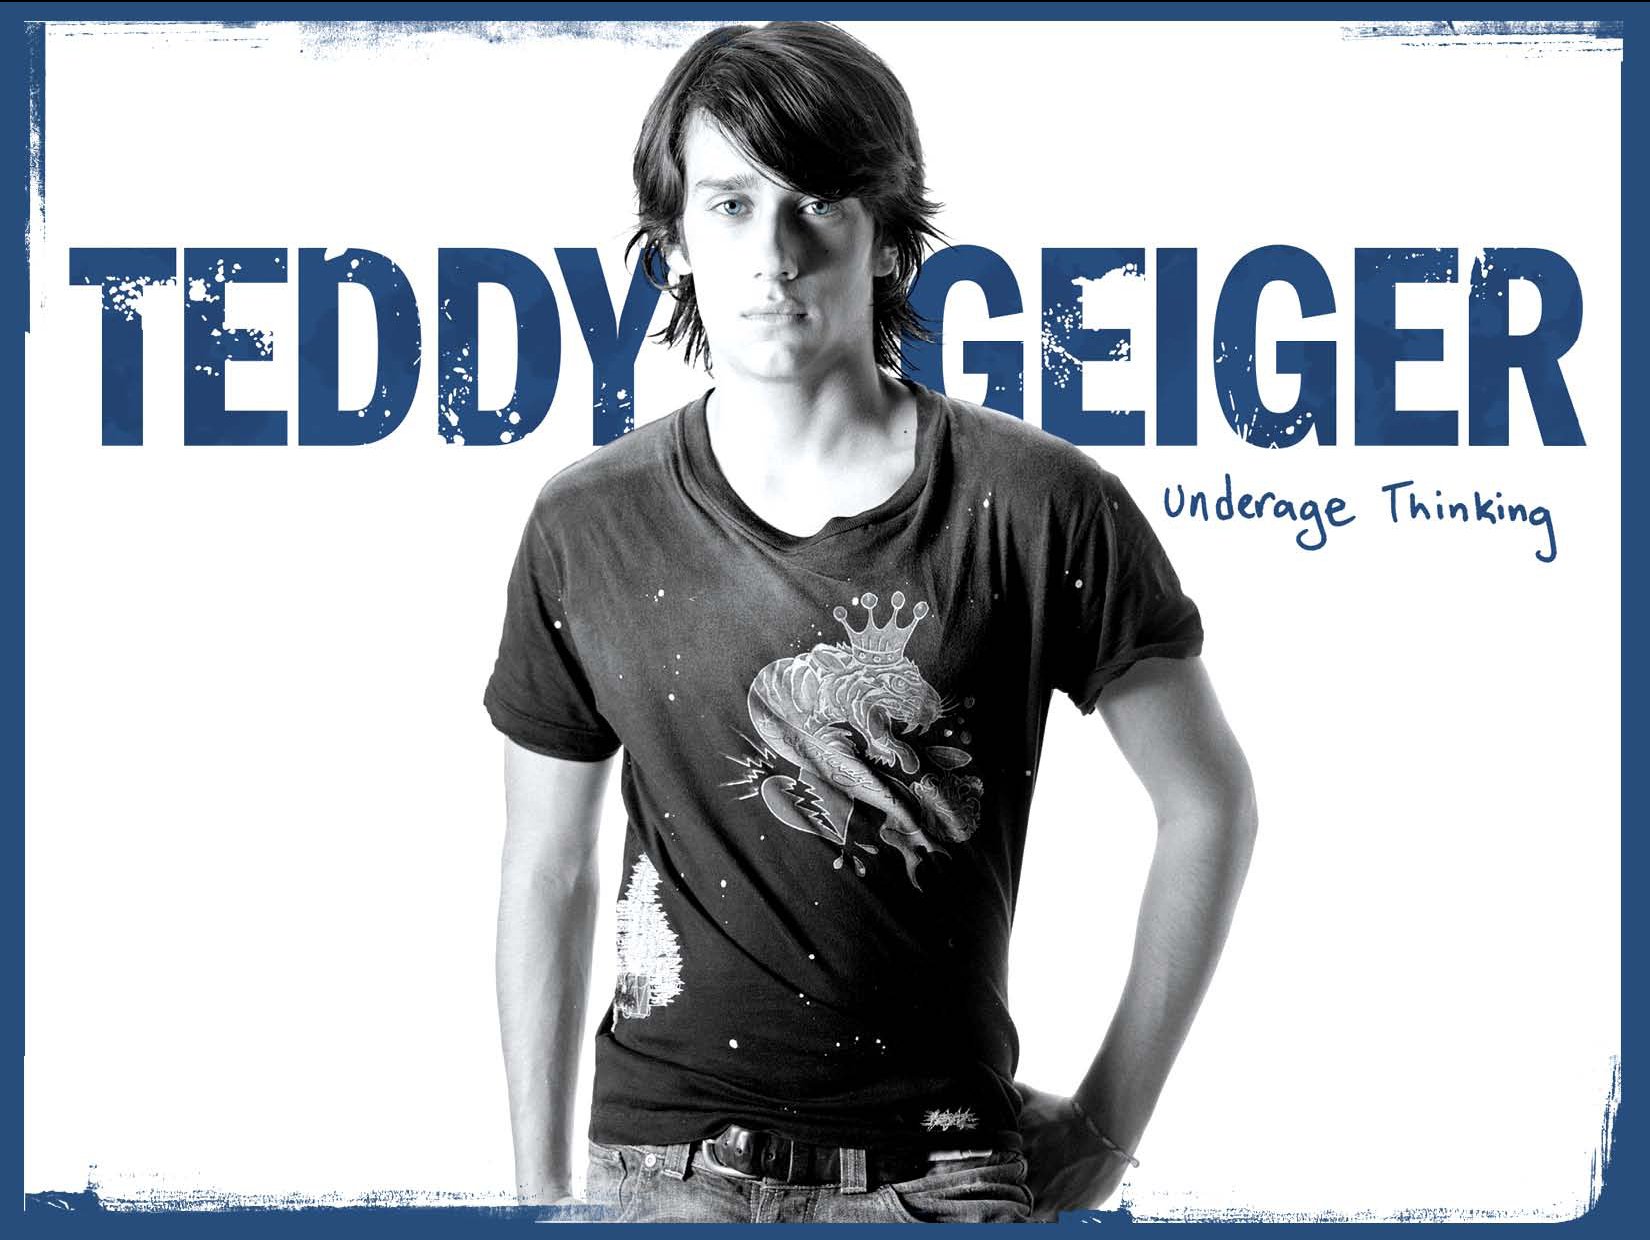 General photo of Teddy Geiger